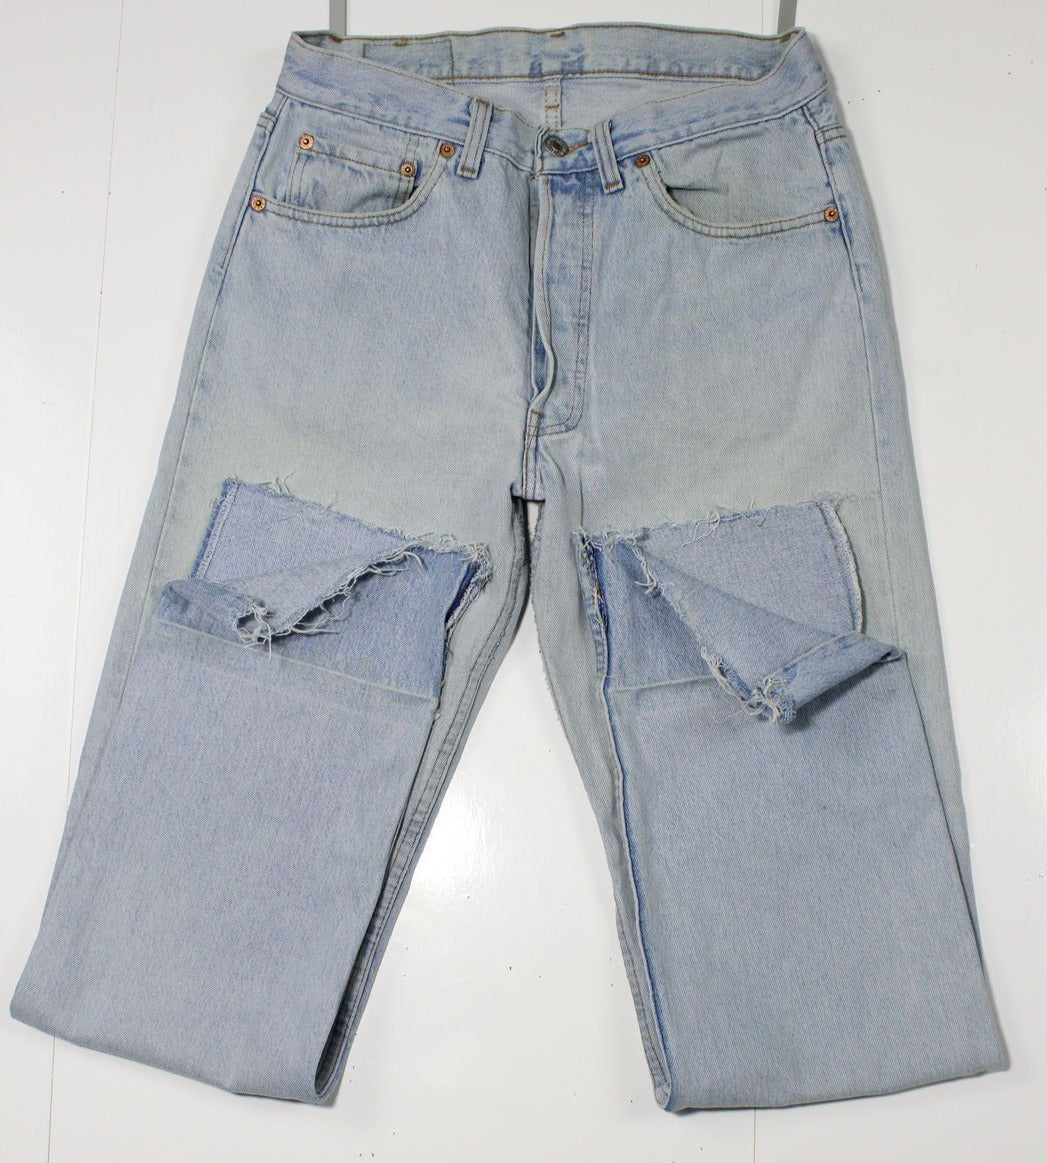 Levi's 501 Denim W33 L32 Denim Made In USA Jeans Vintage